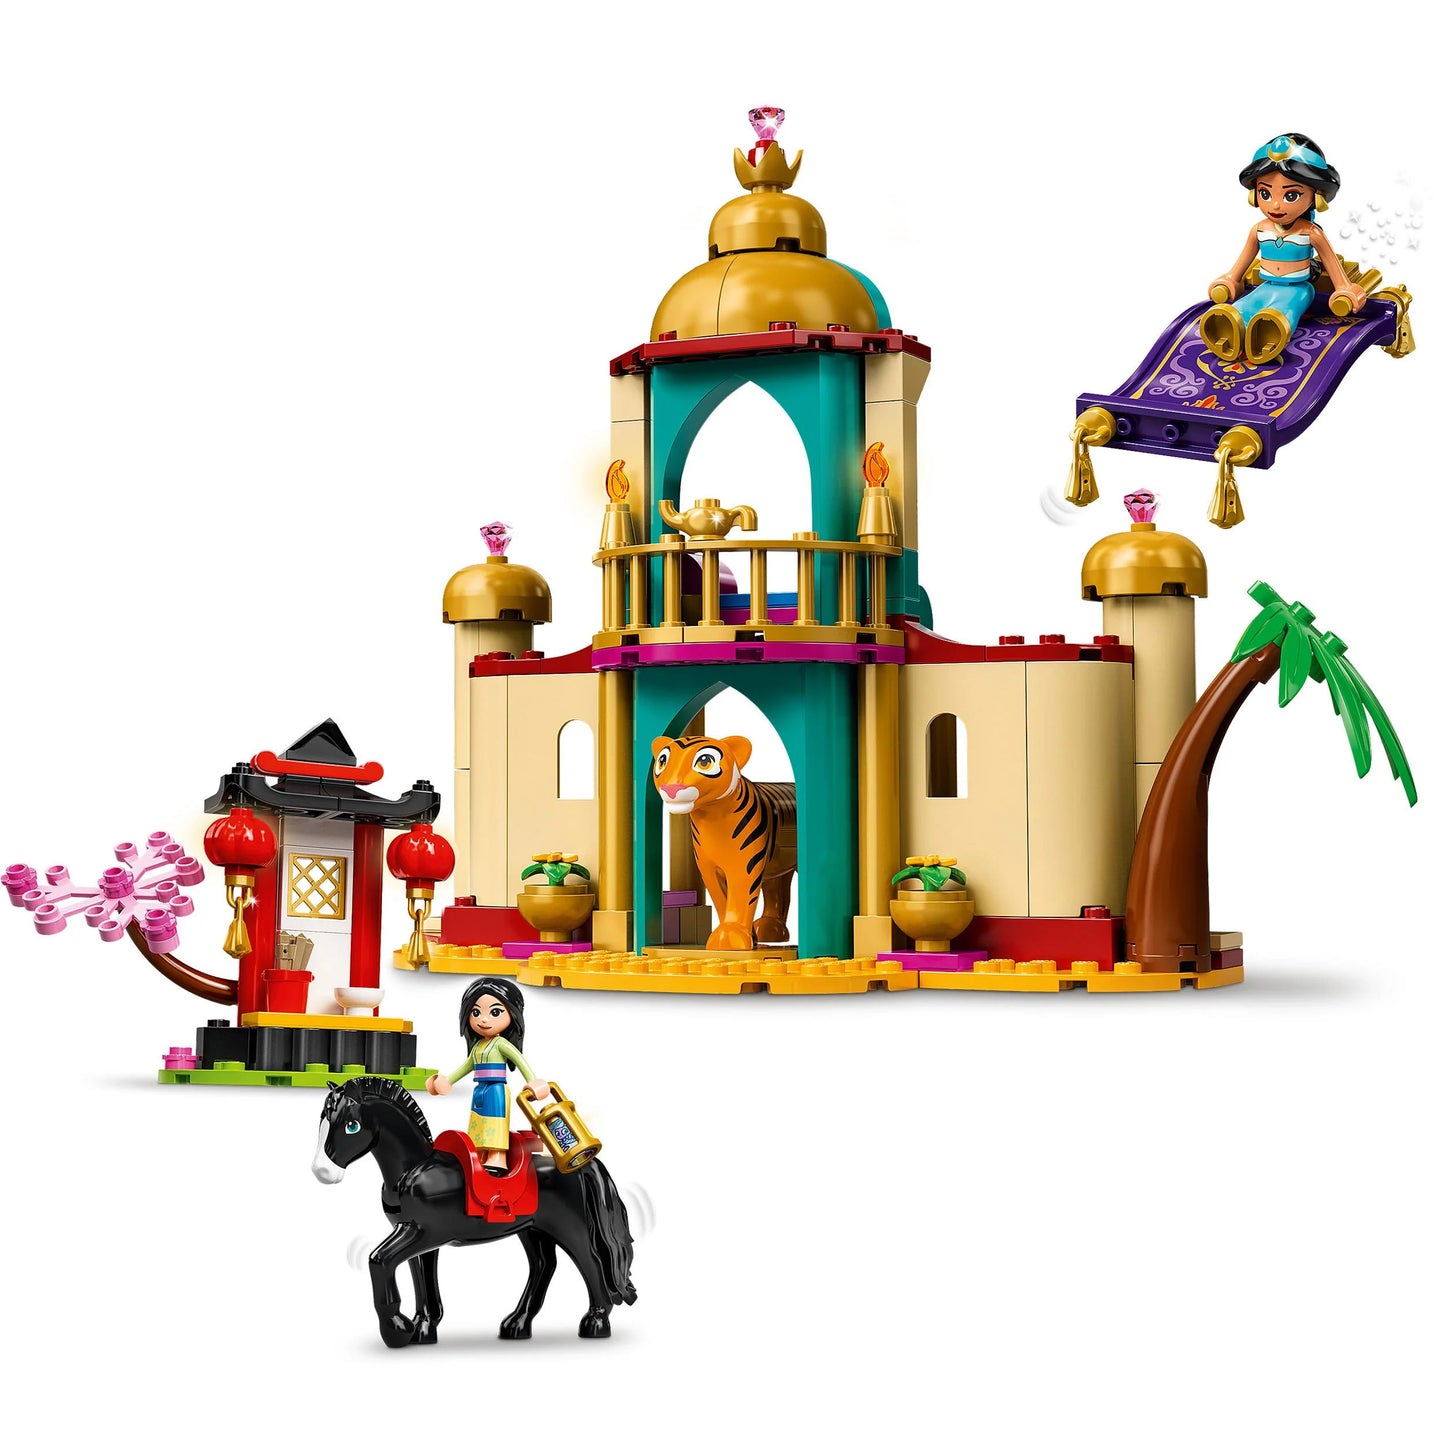 Jasmine and Mulan's adventure - LEGO Disney